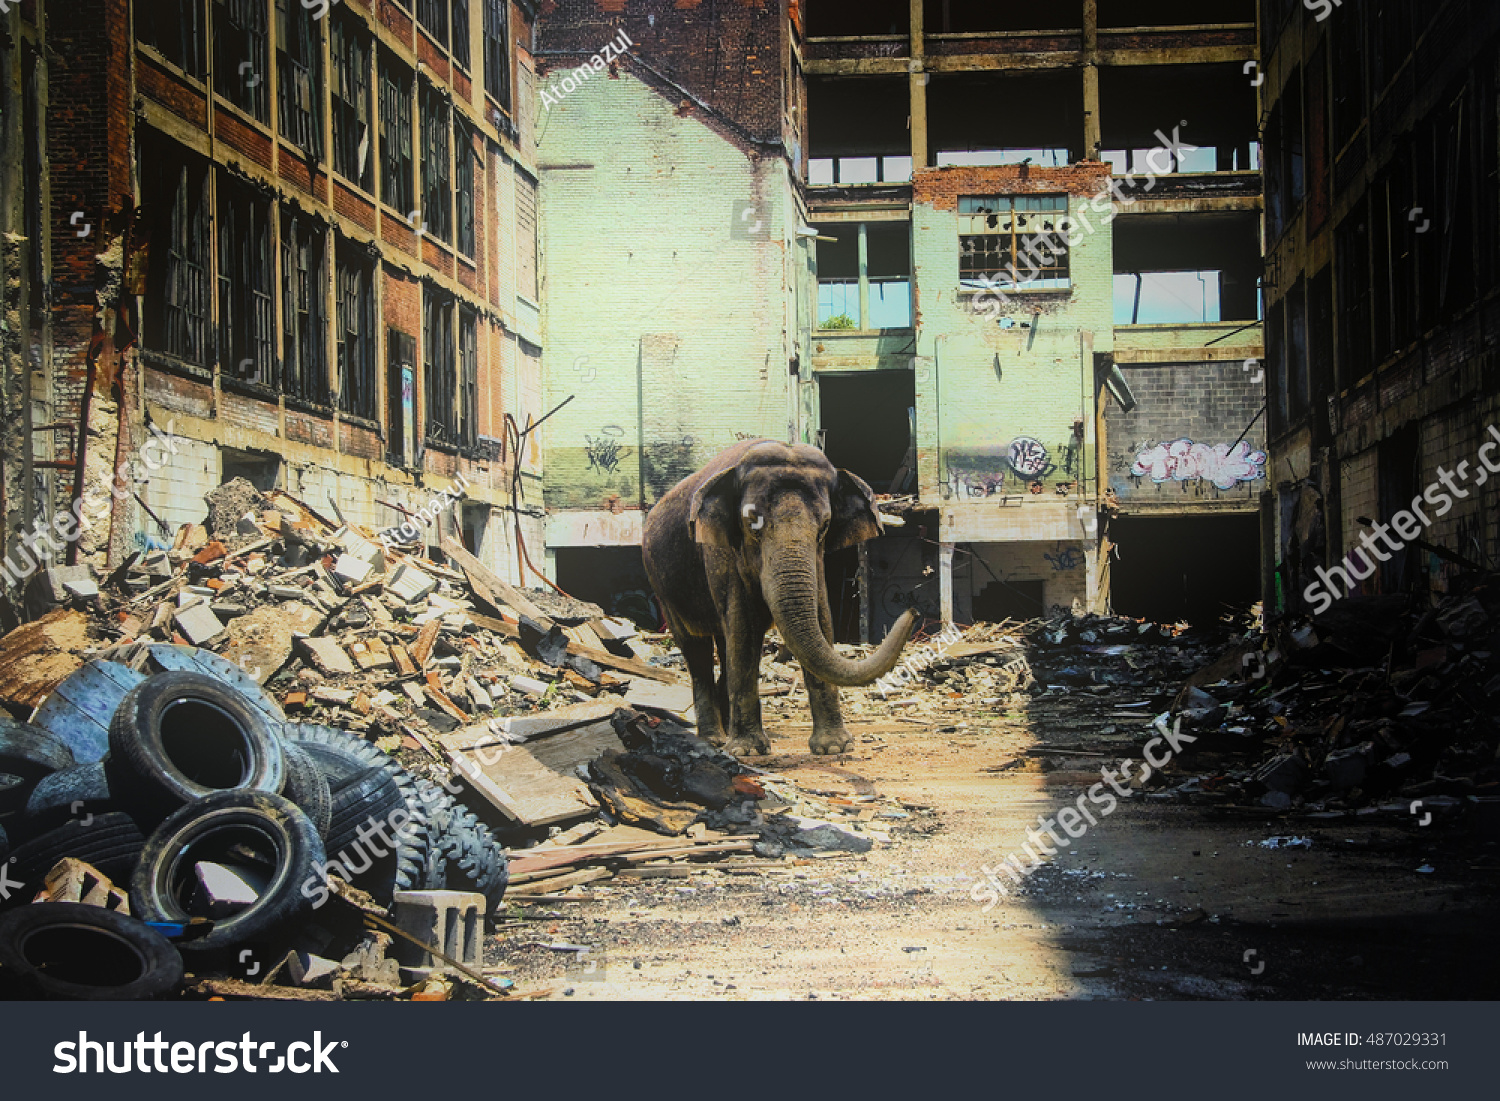 stock-photo-urban-elephant-an-elephant-walking-through-urban-ruins-in-a-post-apocalypse-like-setting-487029331.jpg